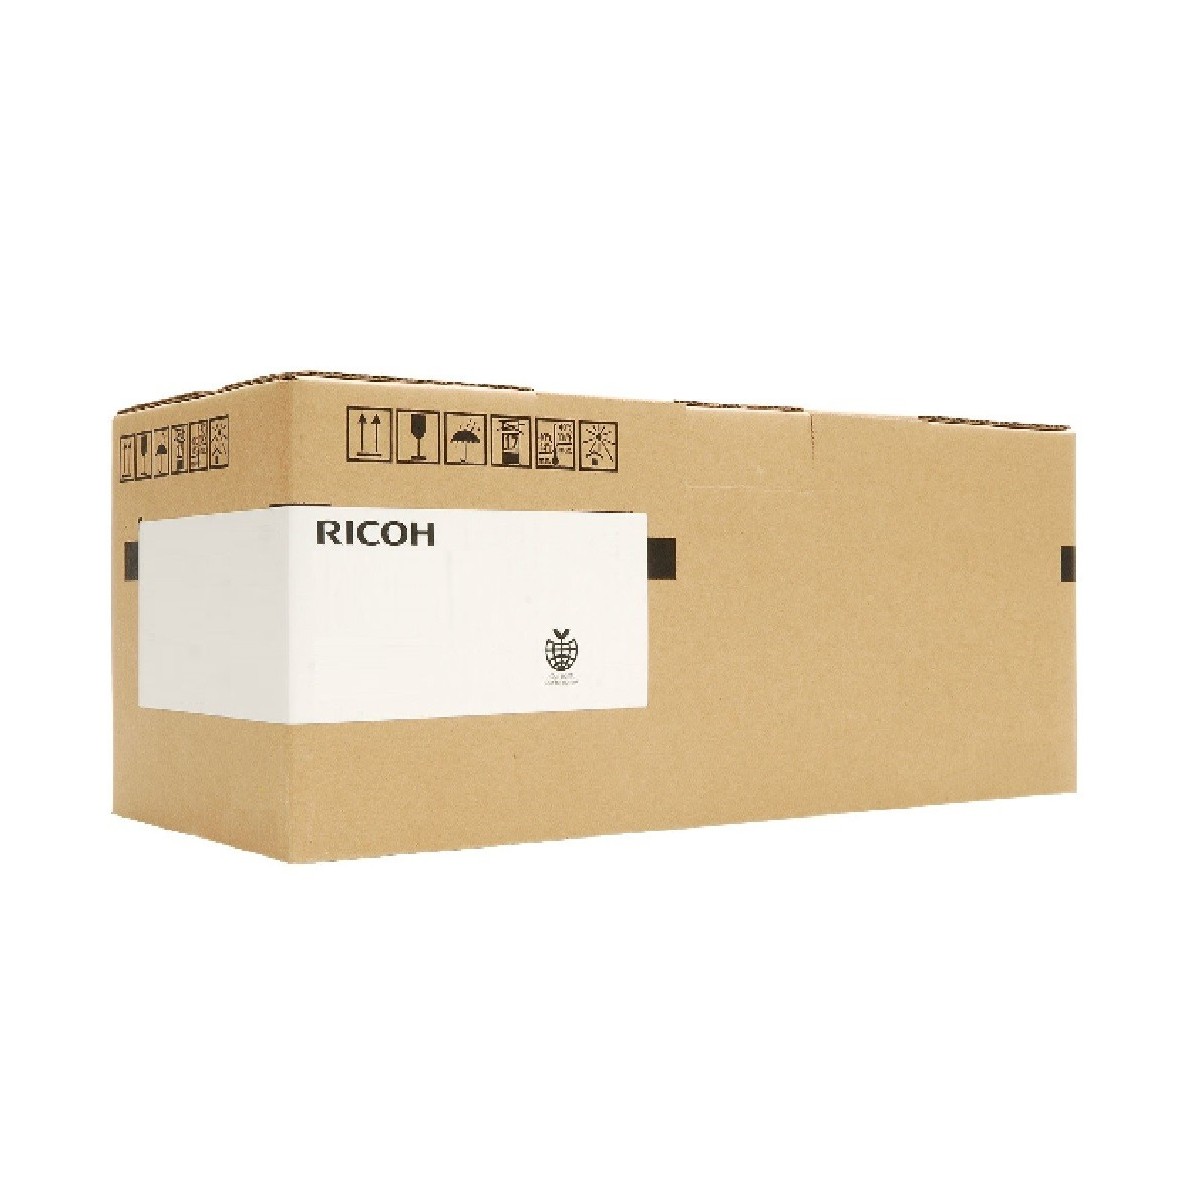 Ricoh DSM415K90A - Maintenance kit - 90000 pages - Ricoh - Aficio 1515 Aficio 1515F Aficio 1515MF Aficio 1515PS - 1 pc(s)